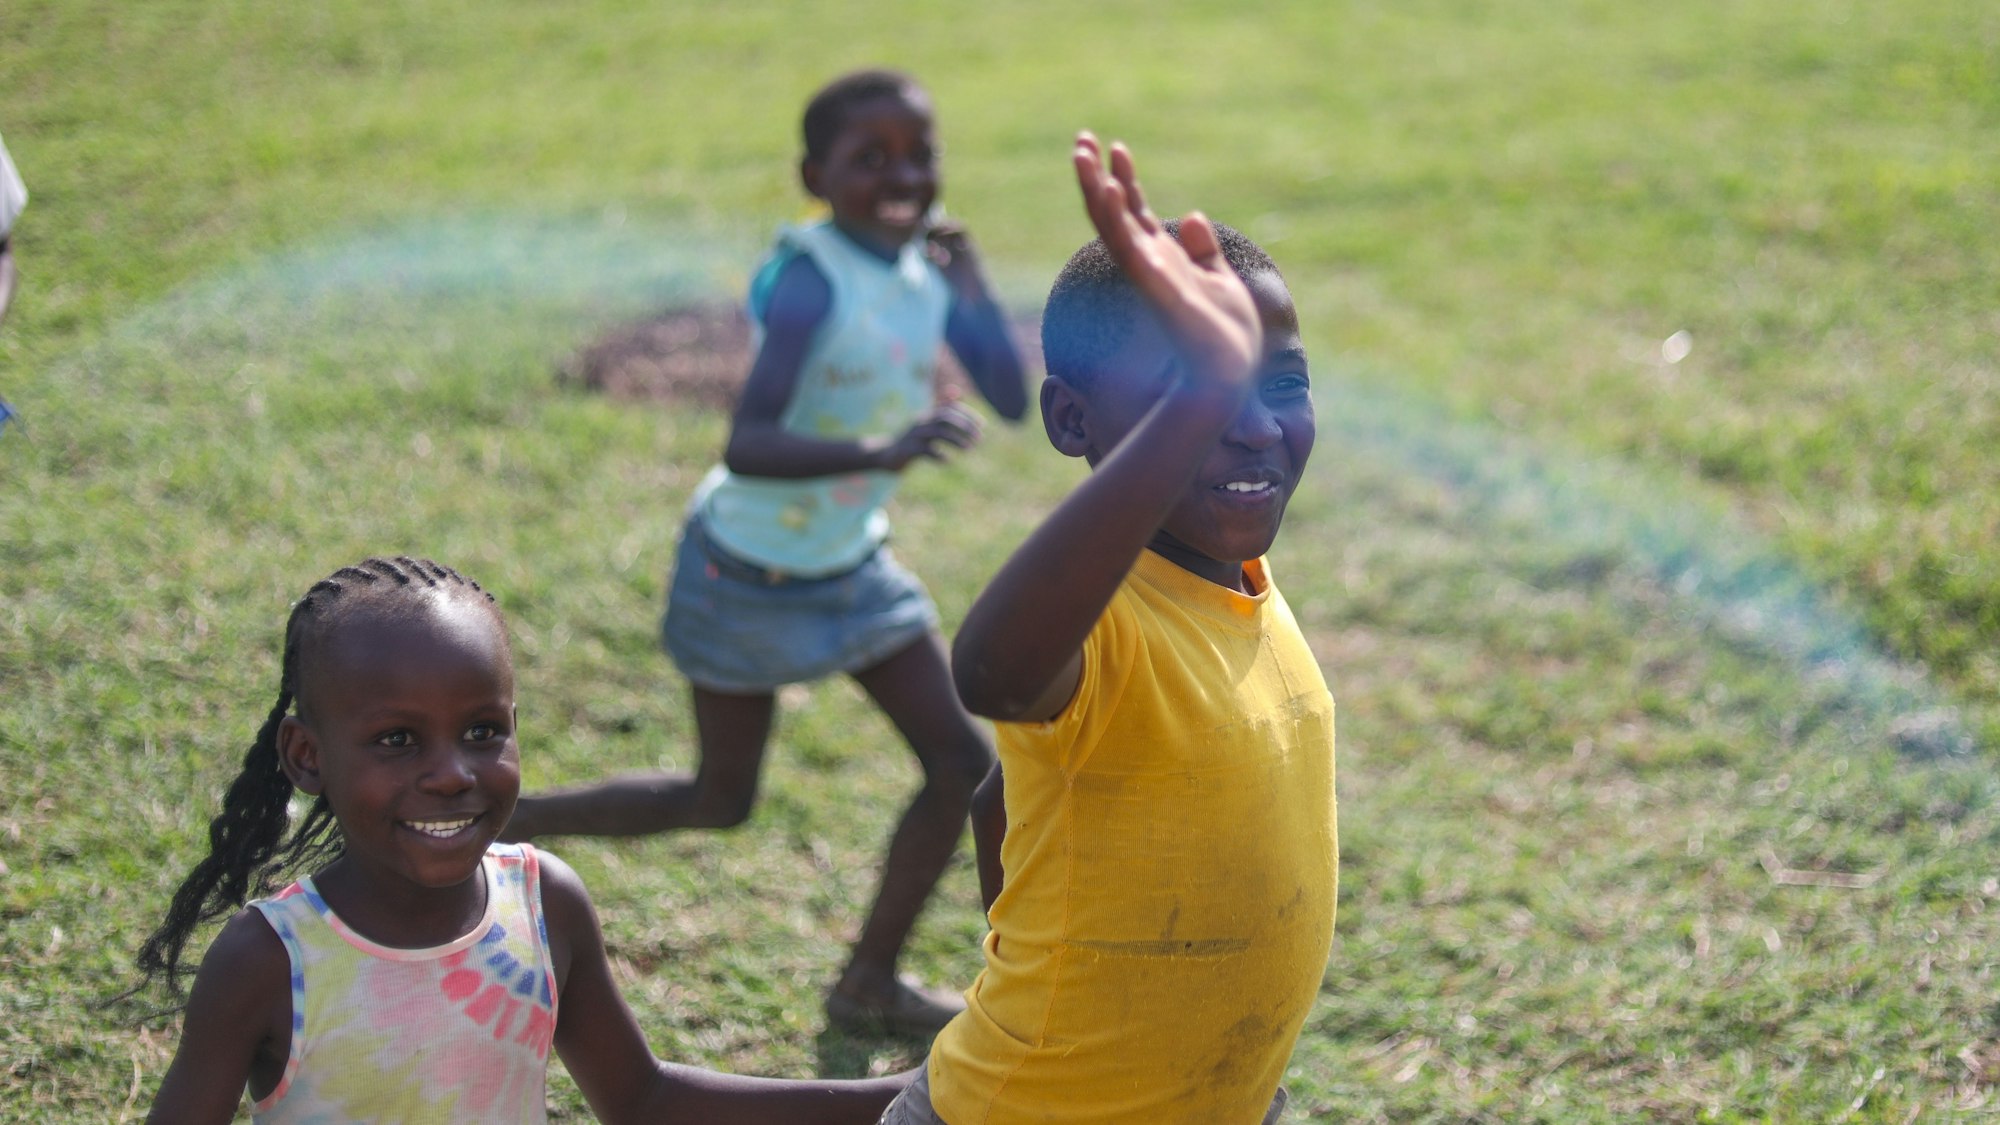 Kids chasing our van when leaving the town in Kisumu.